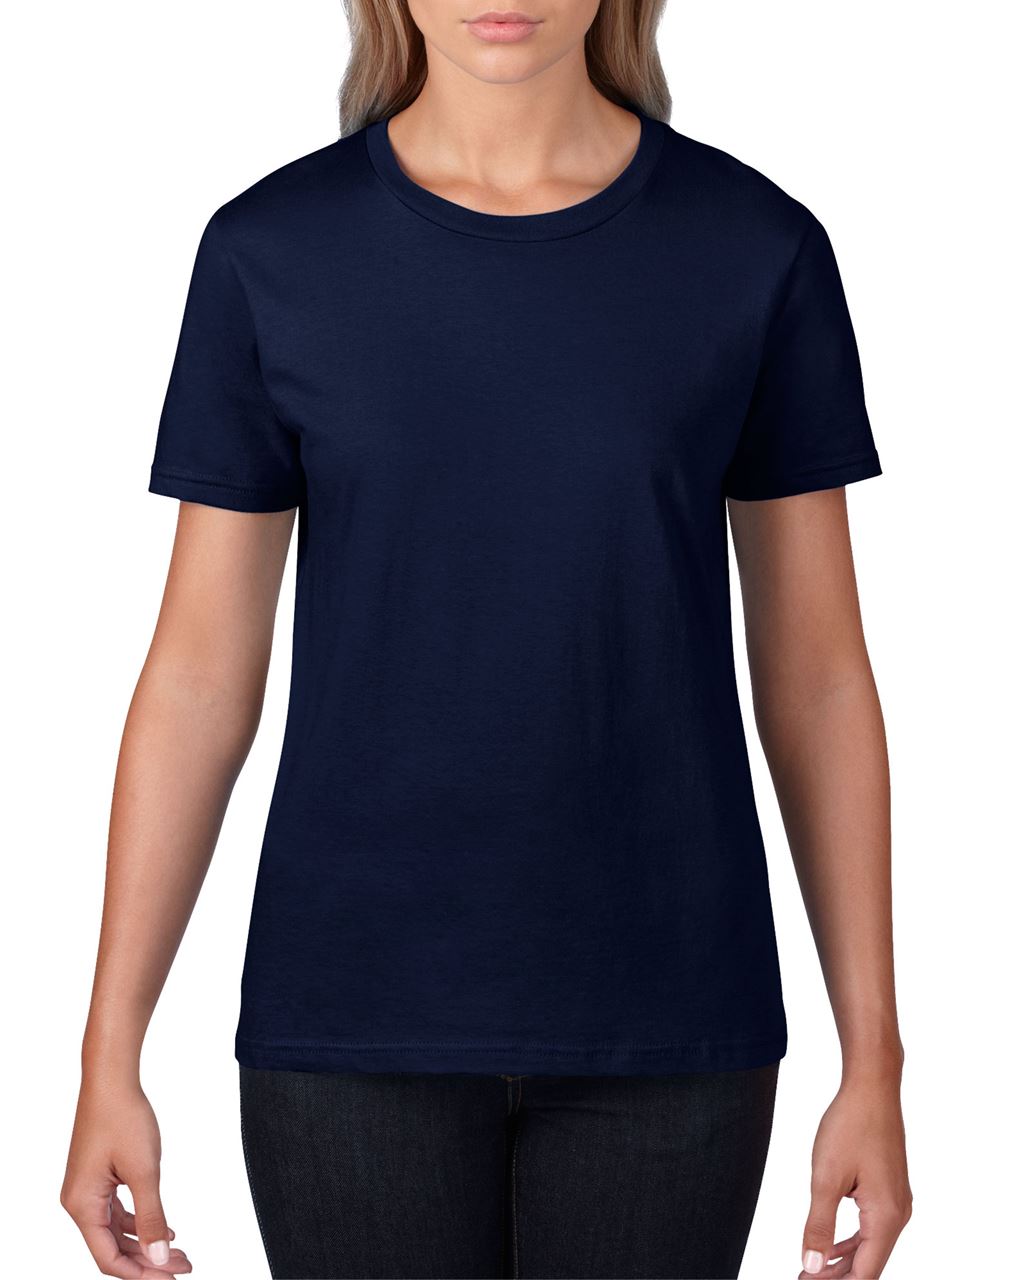 Gildan Premium Cotton® Ladies' T-shirt - blue